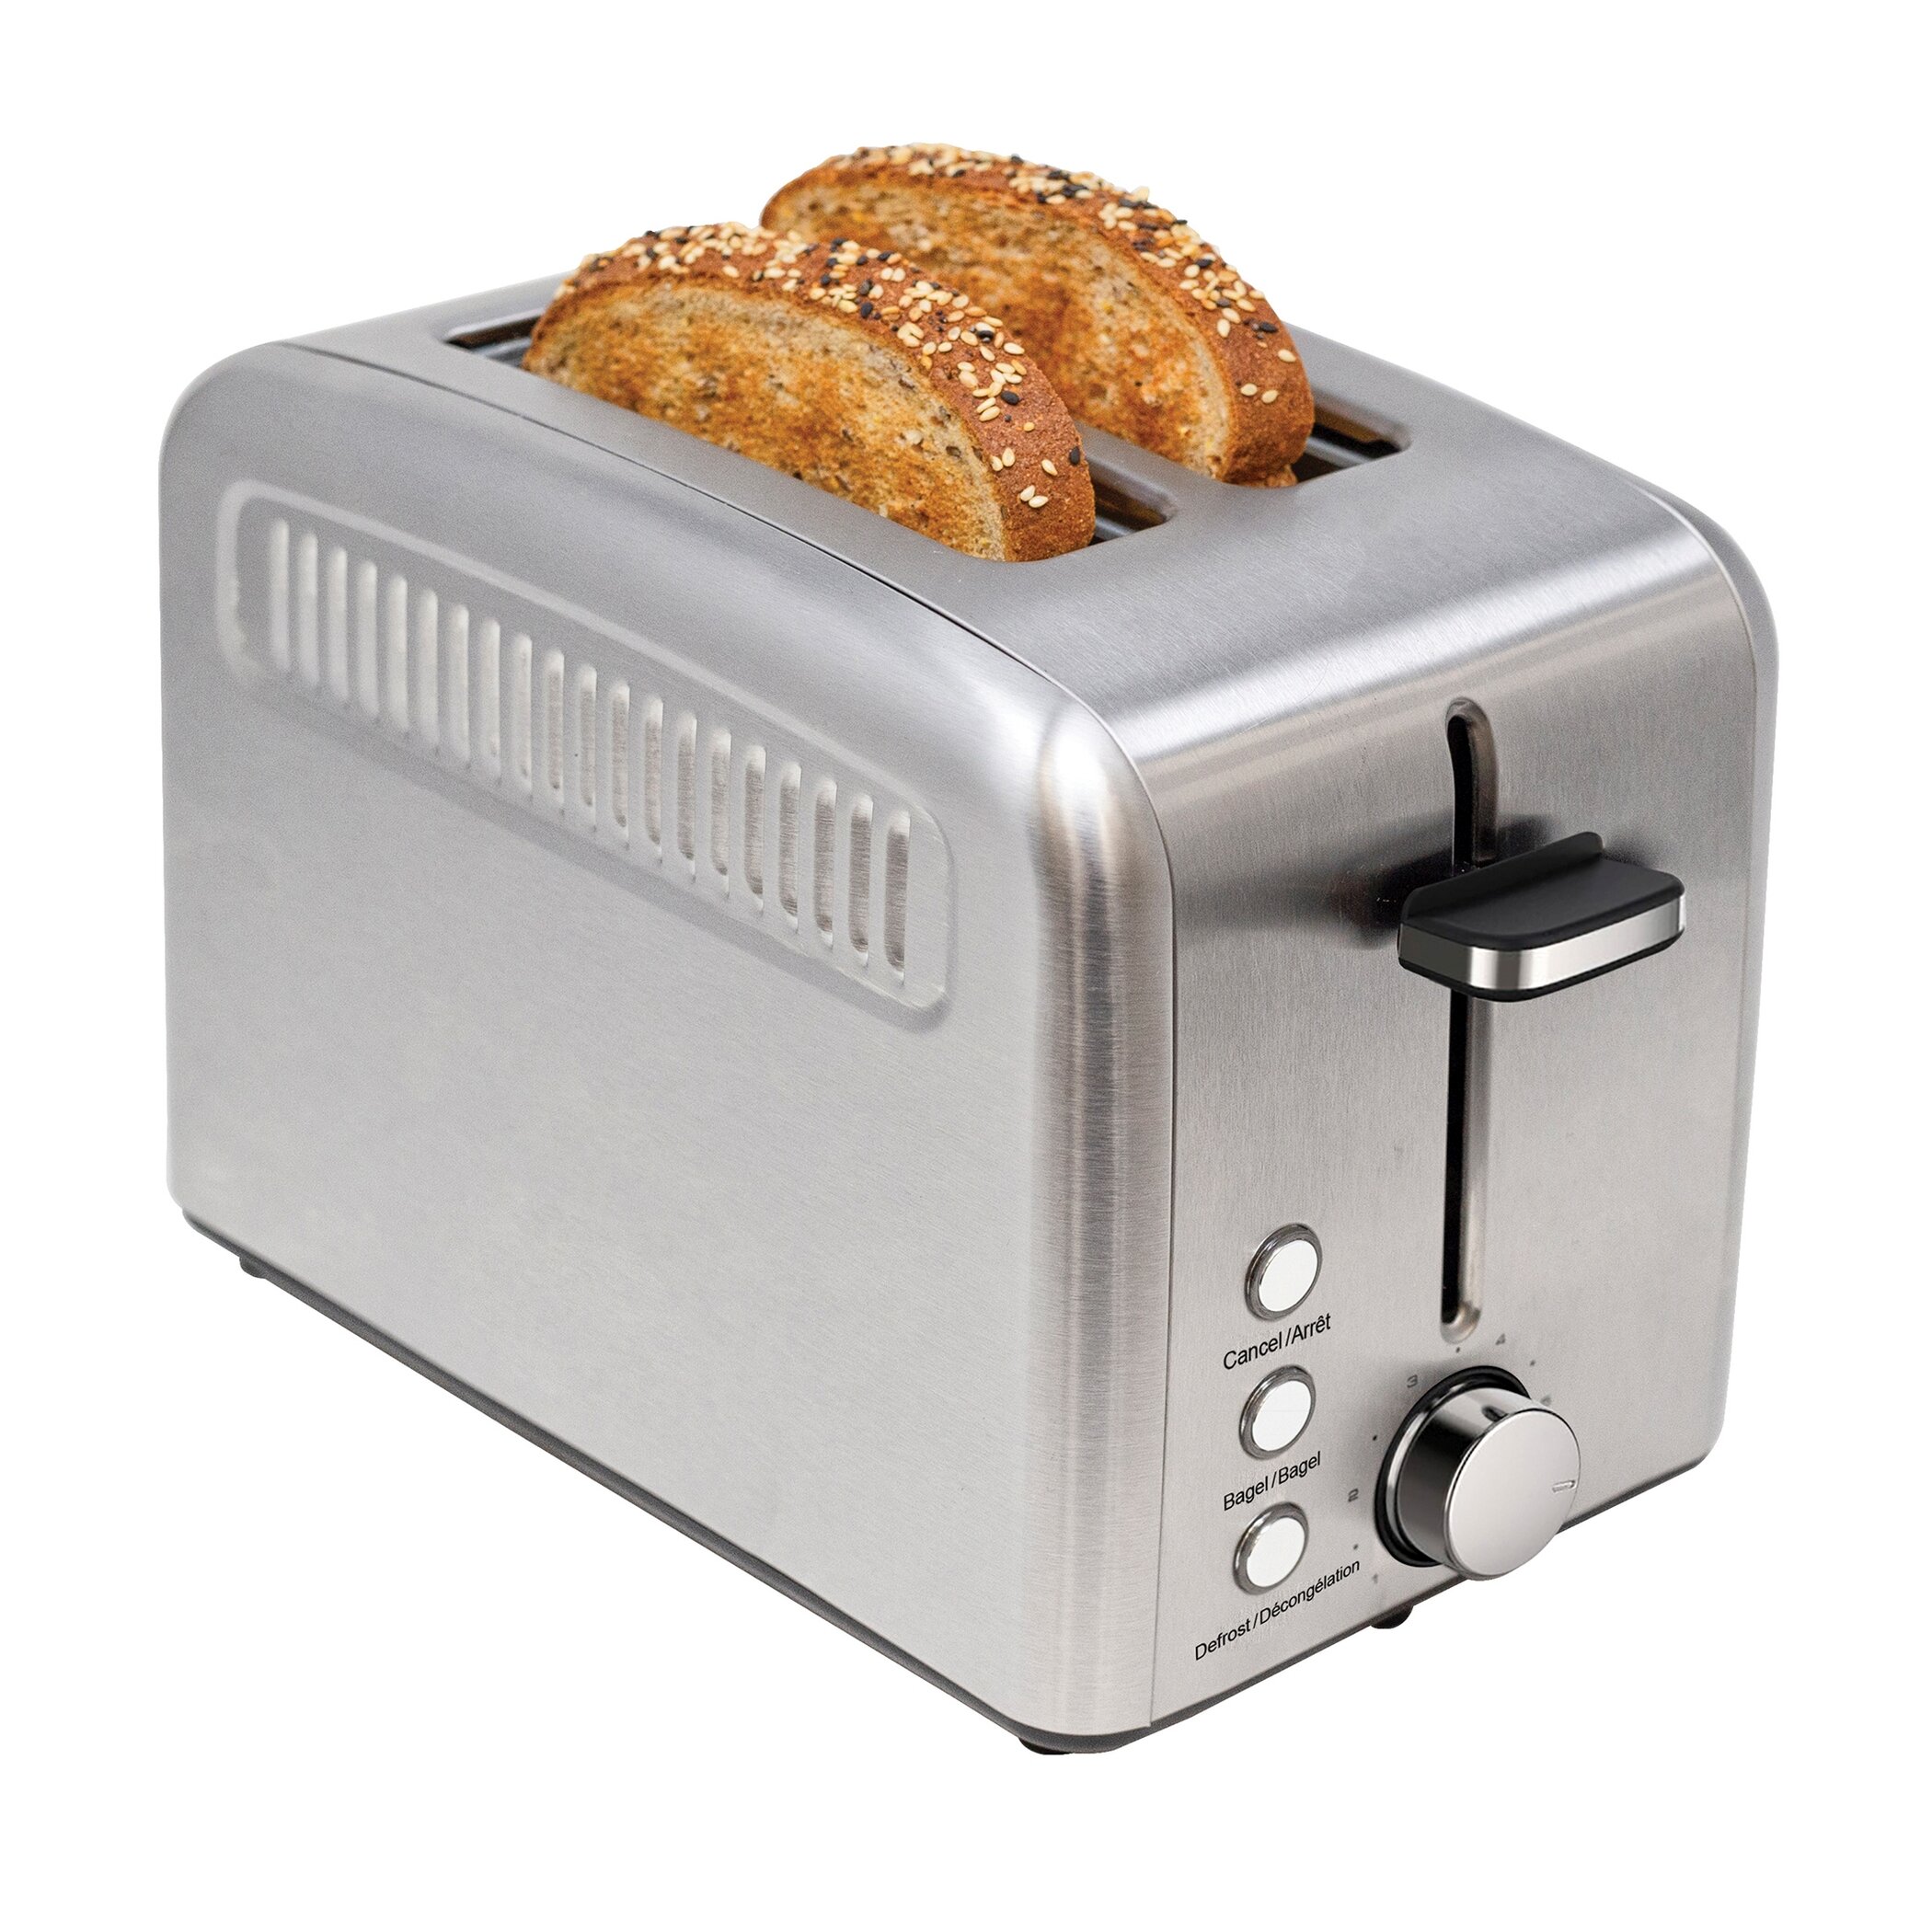 Kalorik Stainless Steel Rapid 2-slice Toaster & Reviews